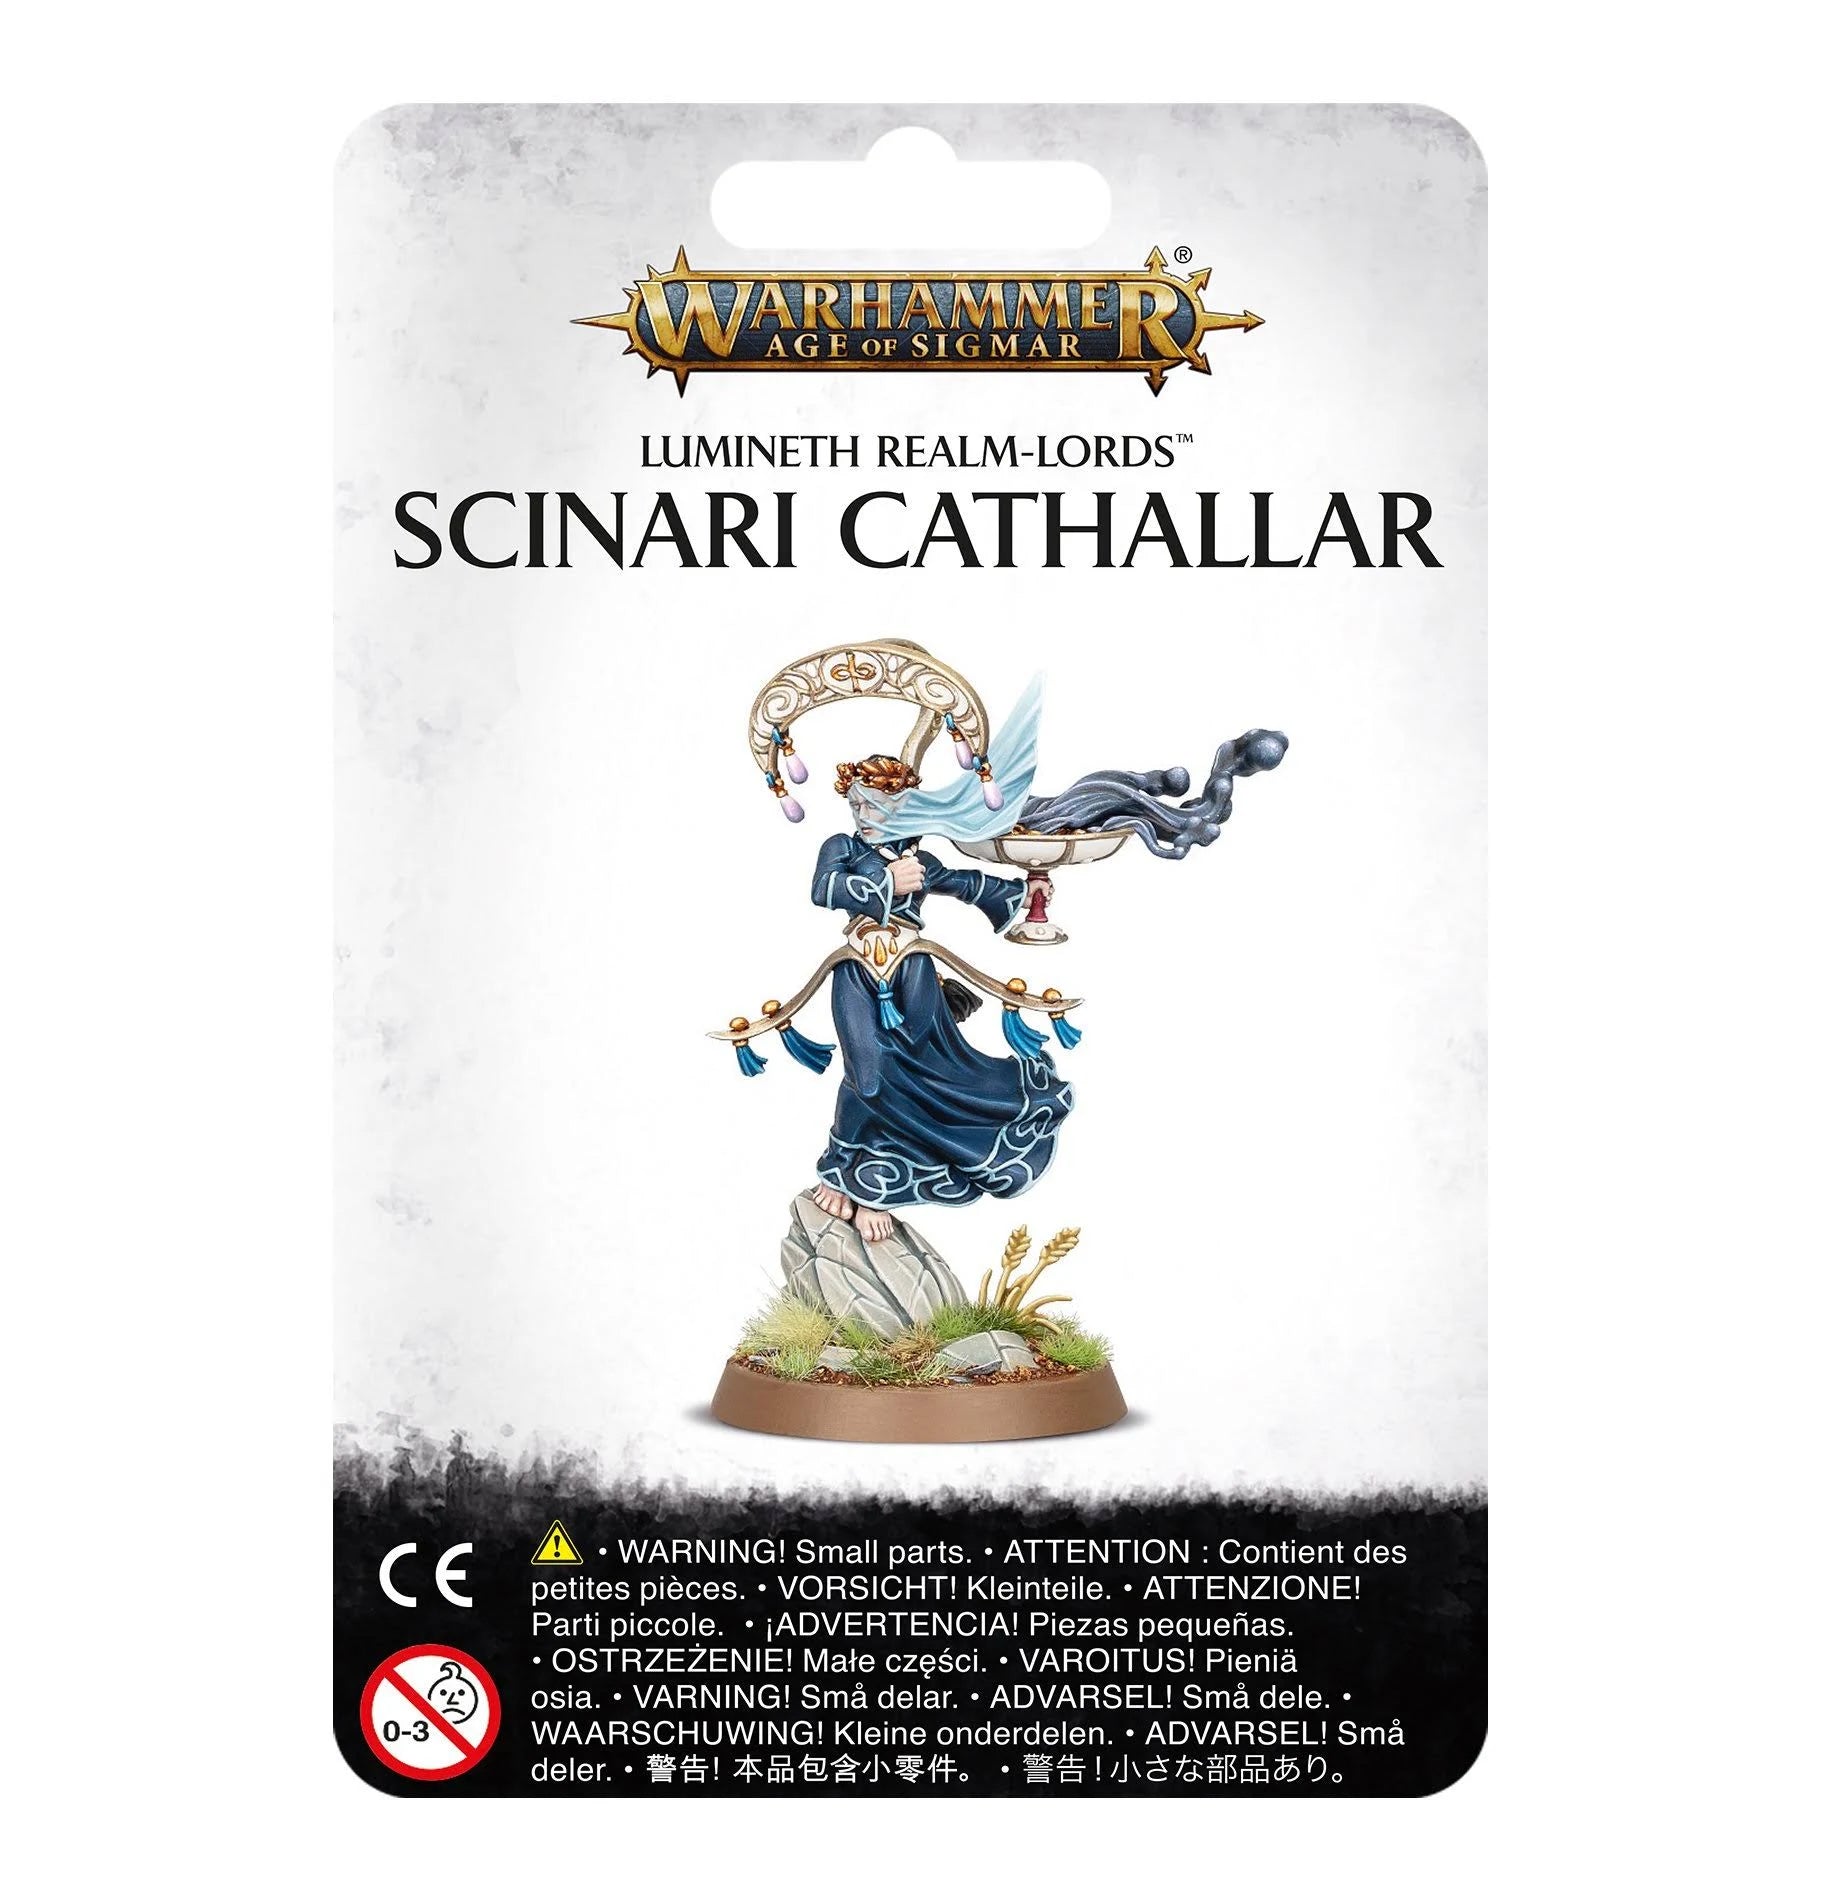 Lumineth Realm-lords Scinari Catha